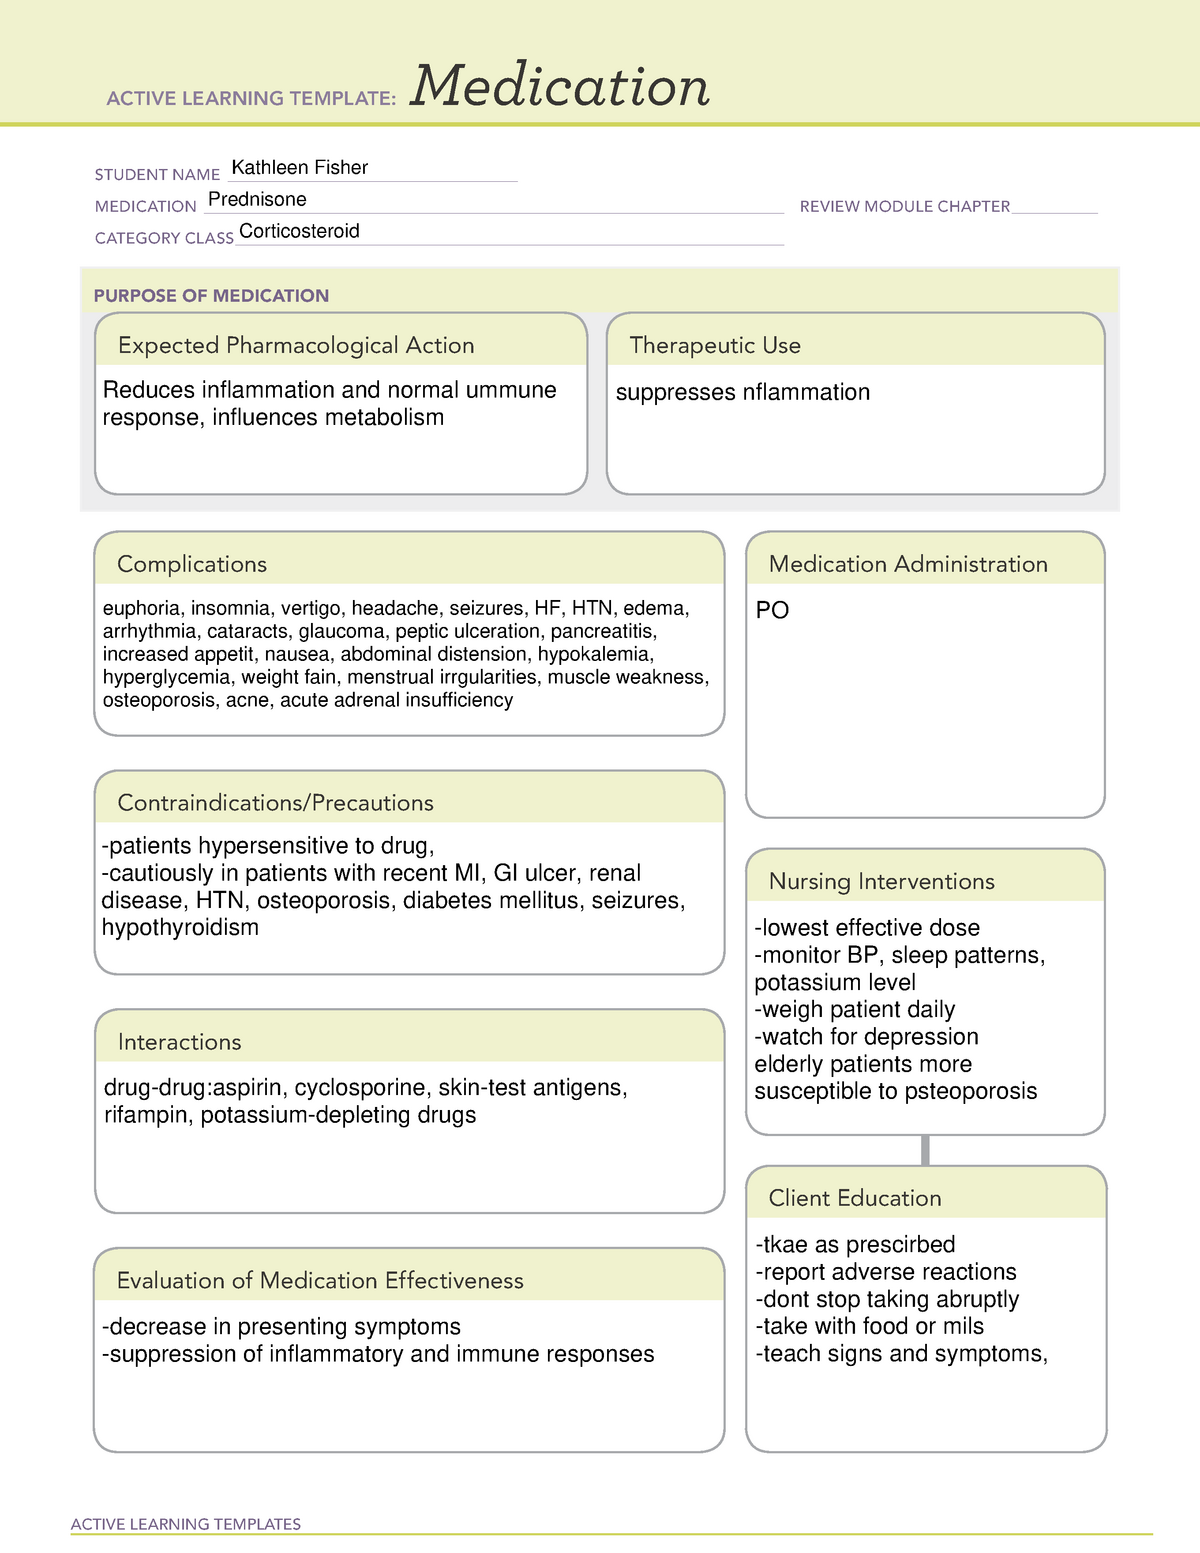 medtemp-prednisone-ati-medication-system-template-active-learning